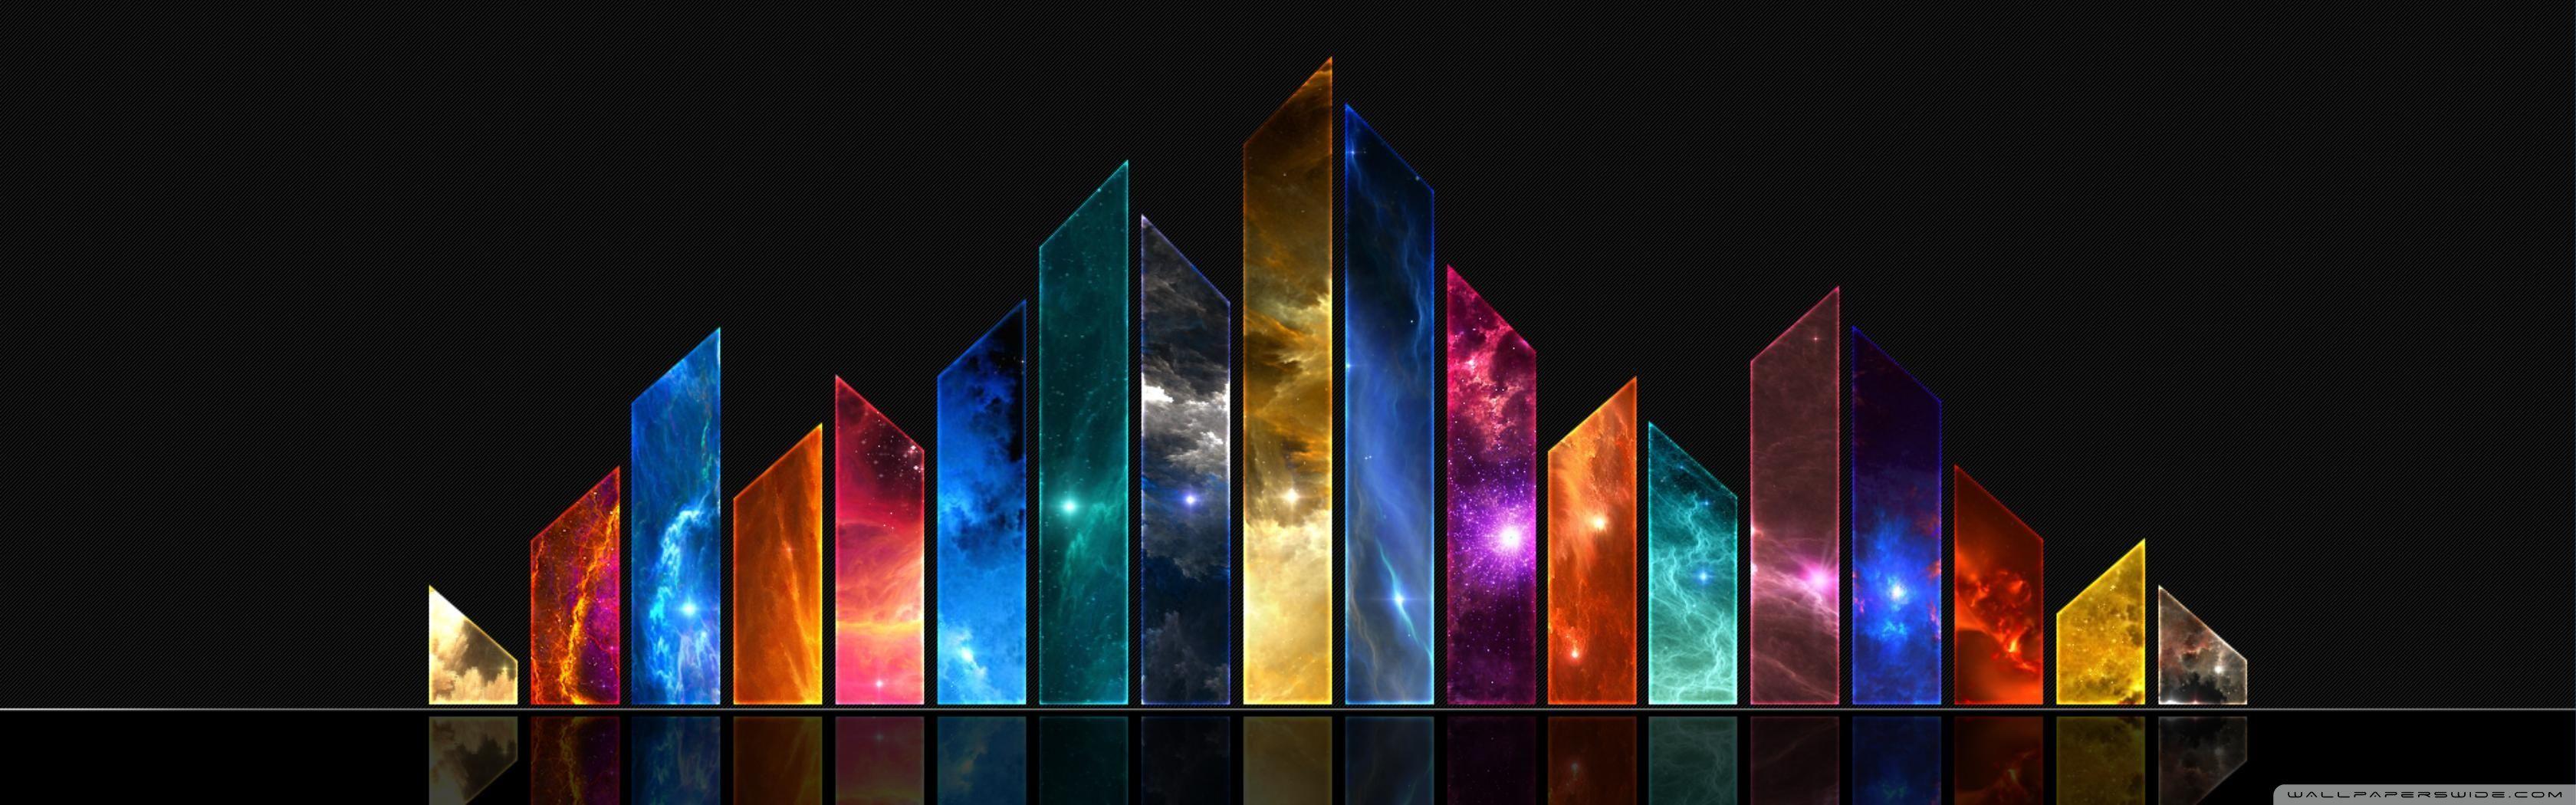 Spectrum Crystals HD desktop wallpaper, High Definition